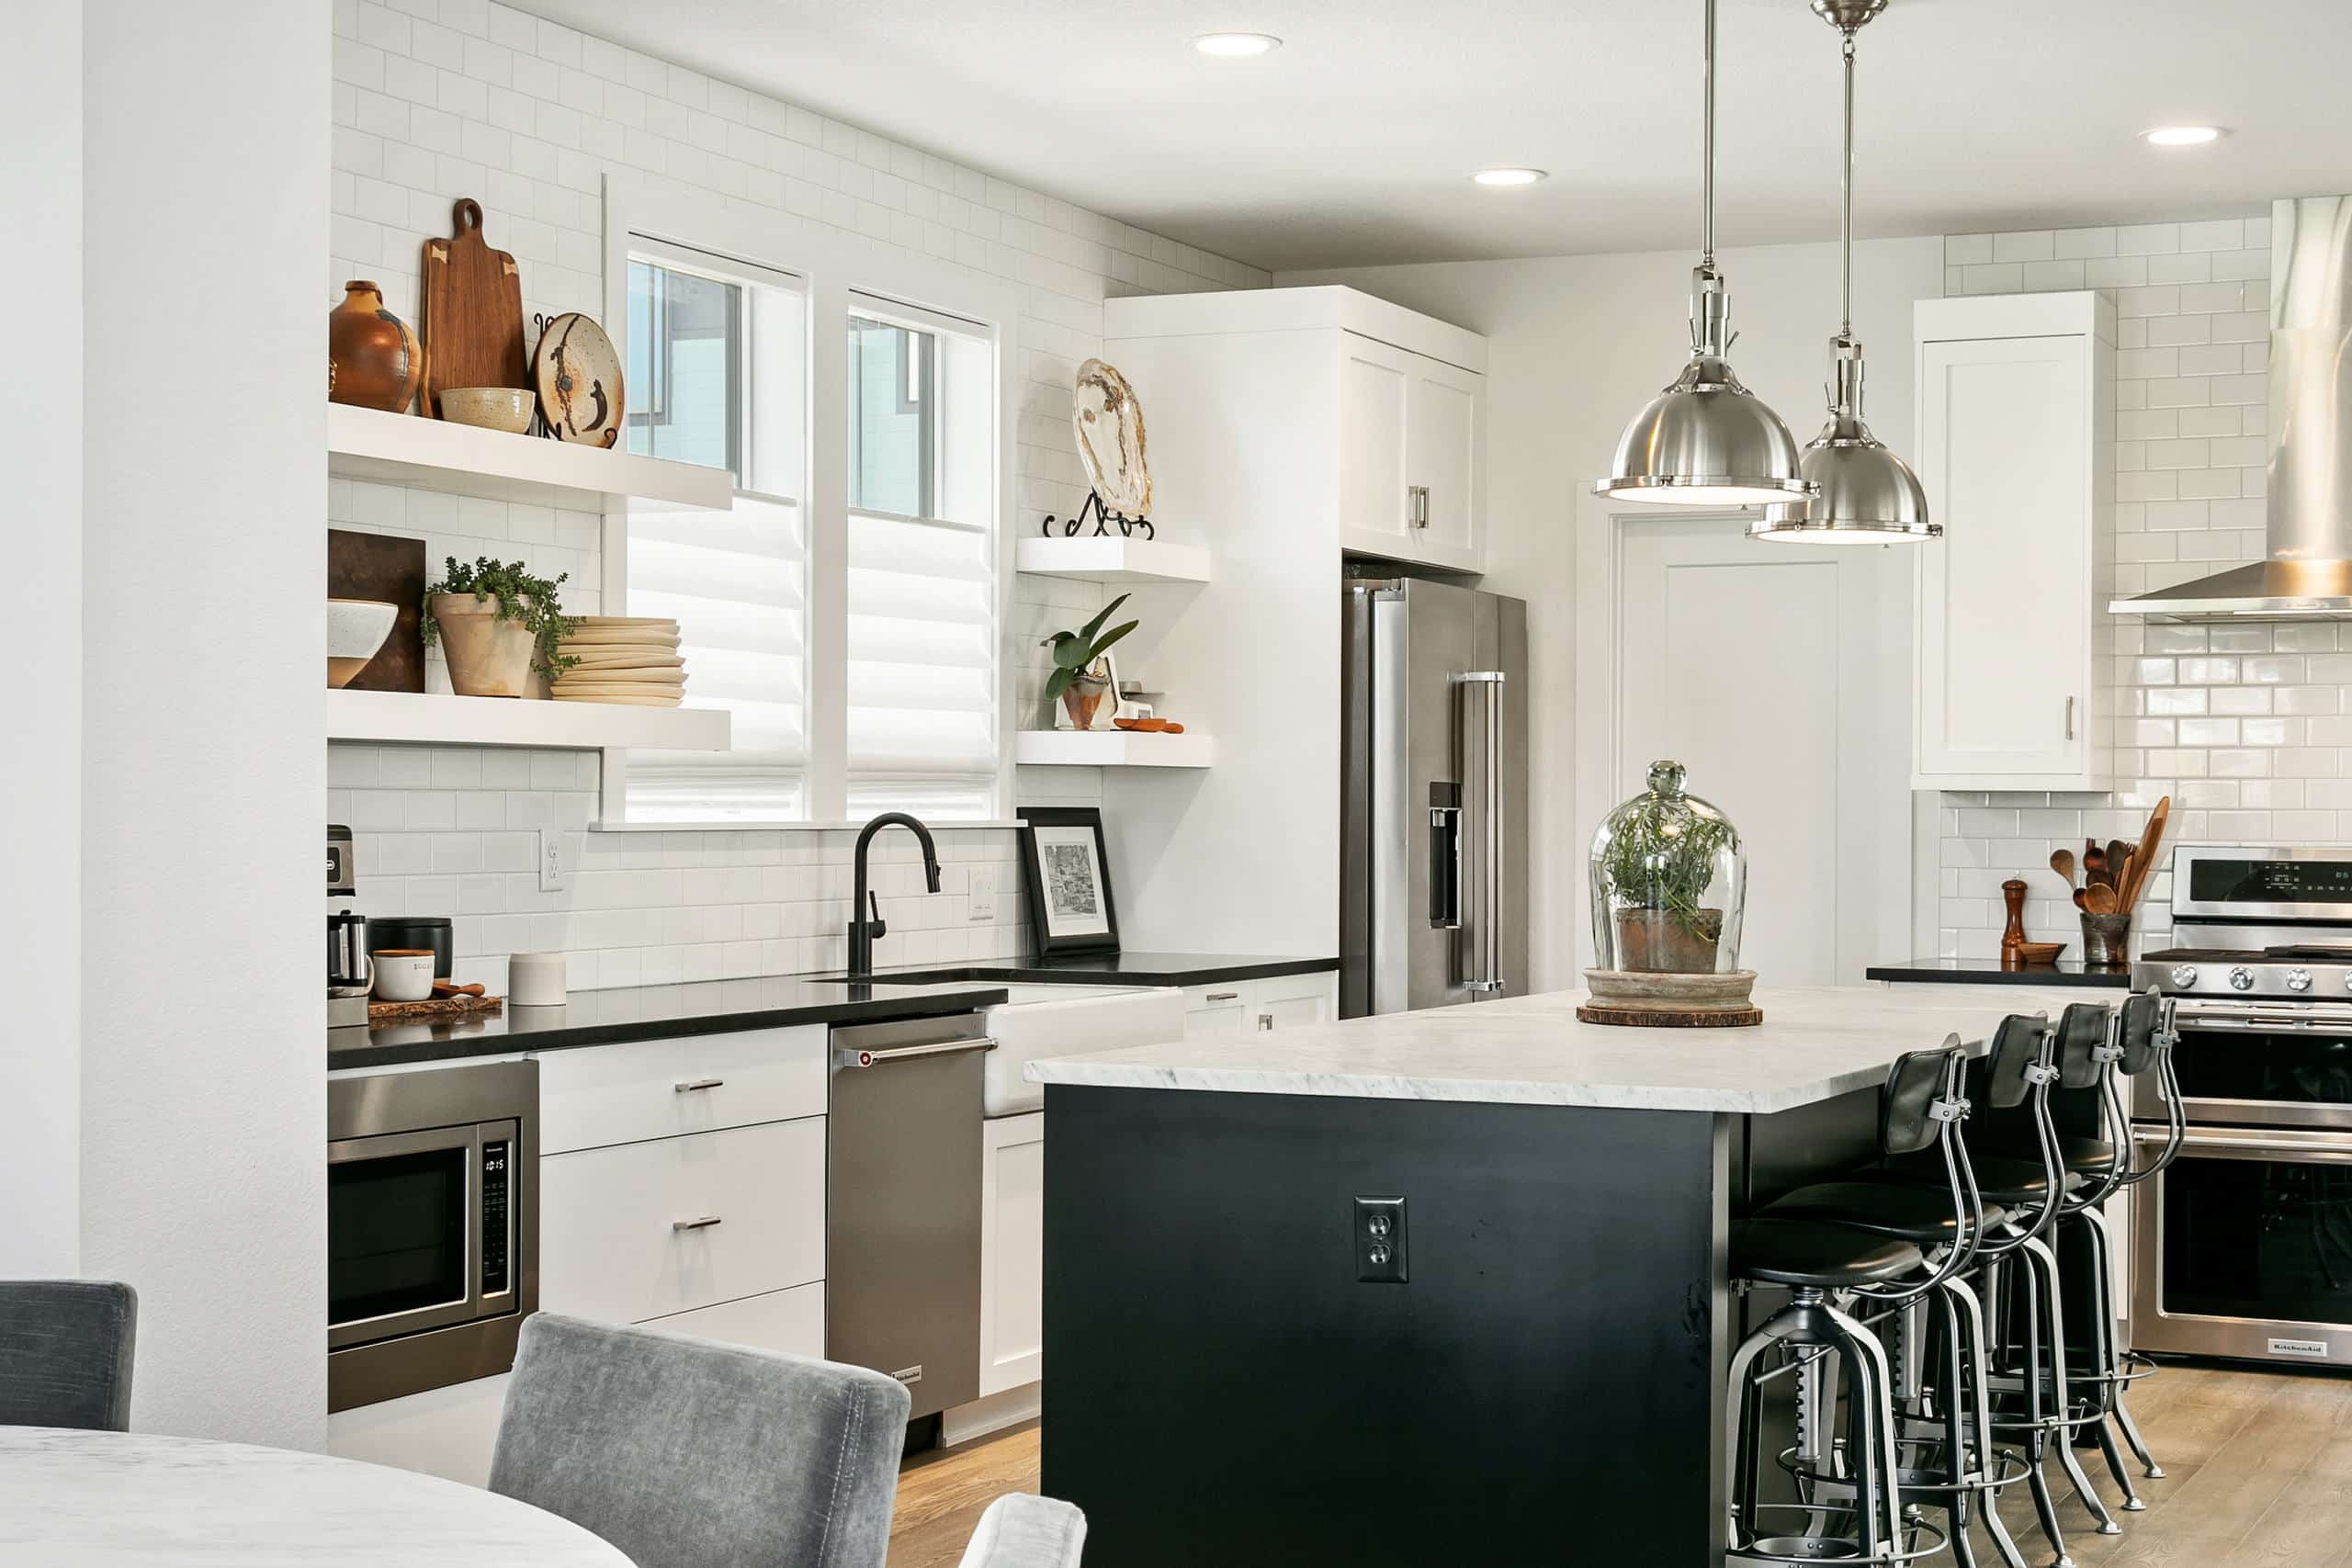 Premium real estate photo of a kitchen in Colorado / Boxwood Photos